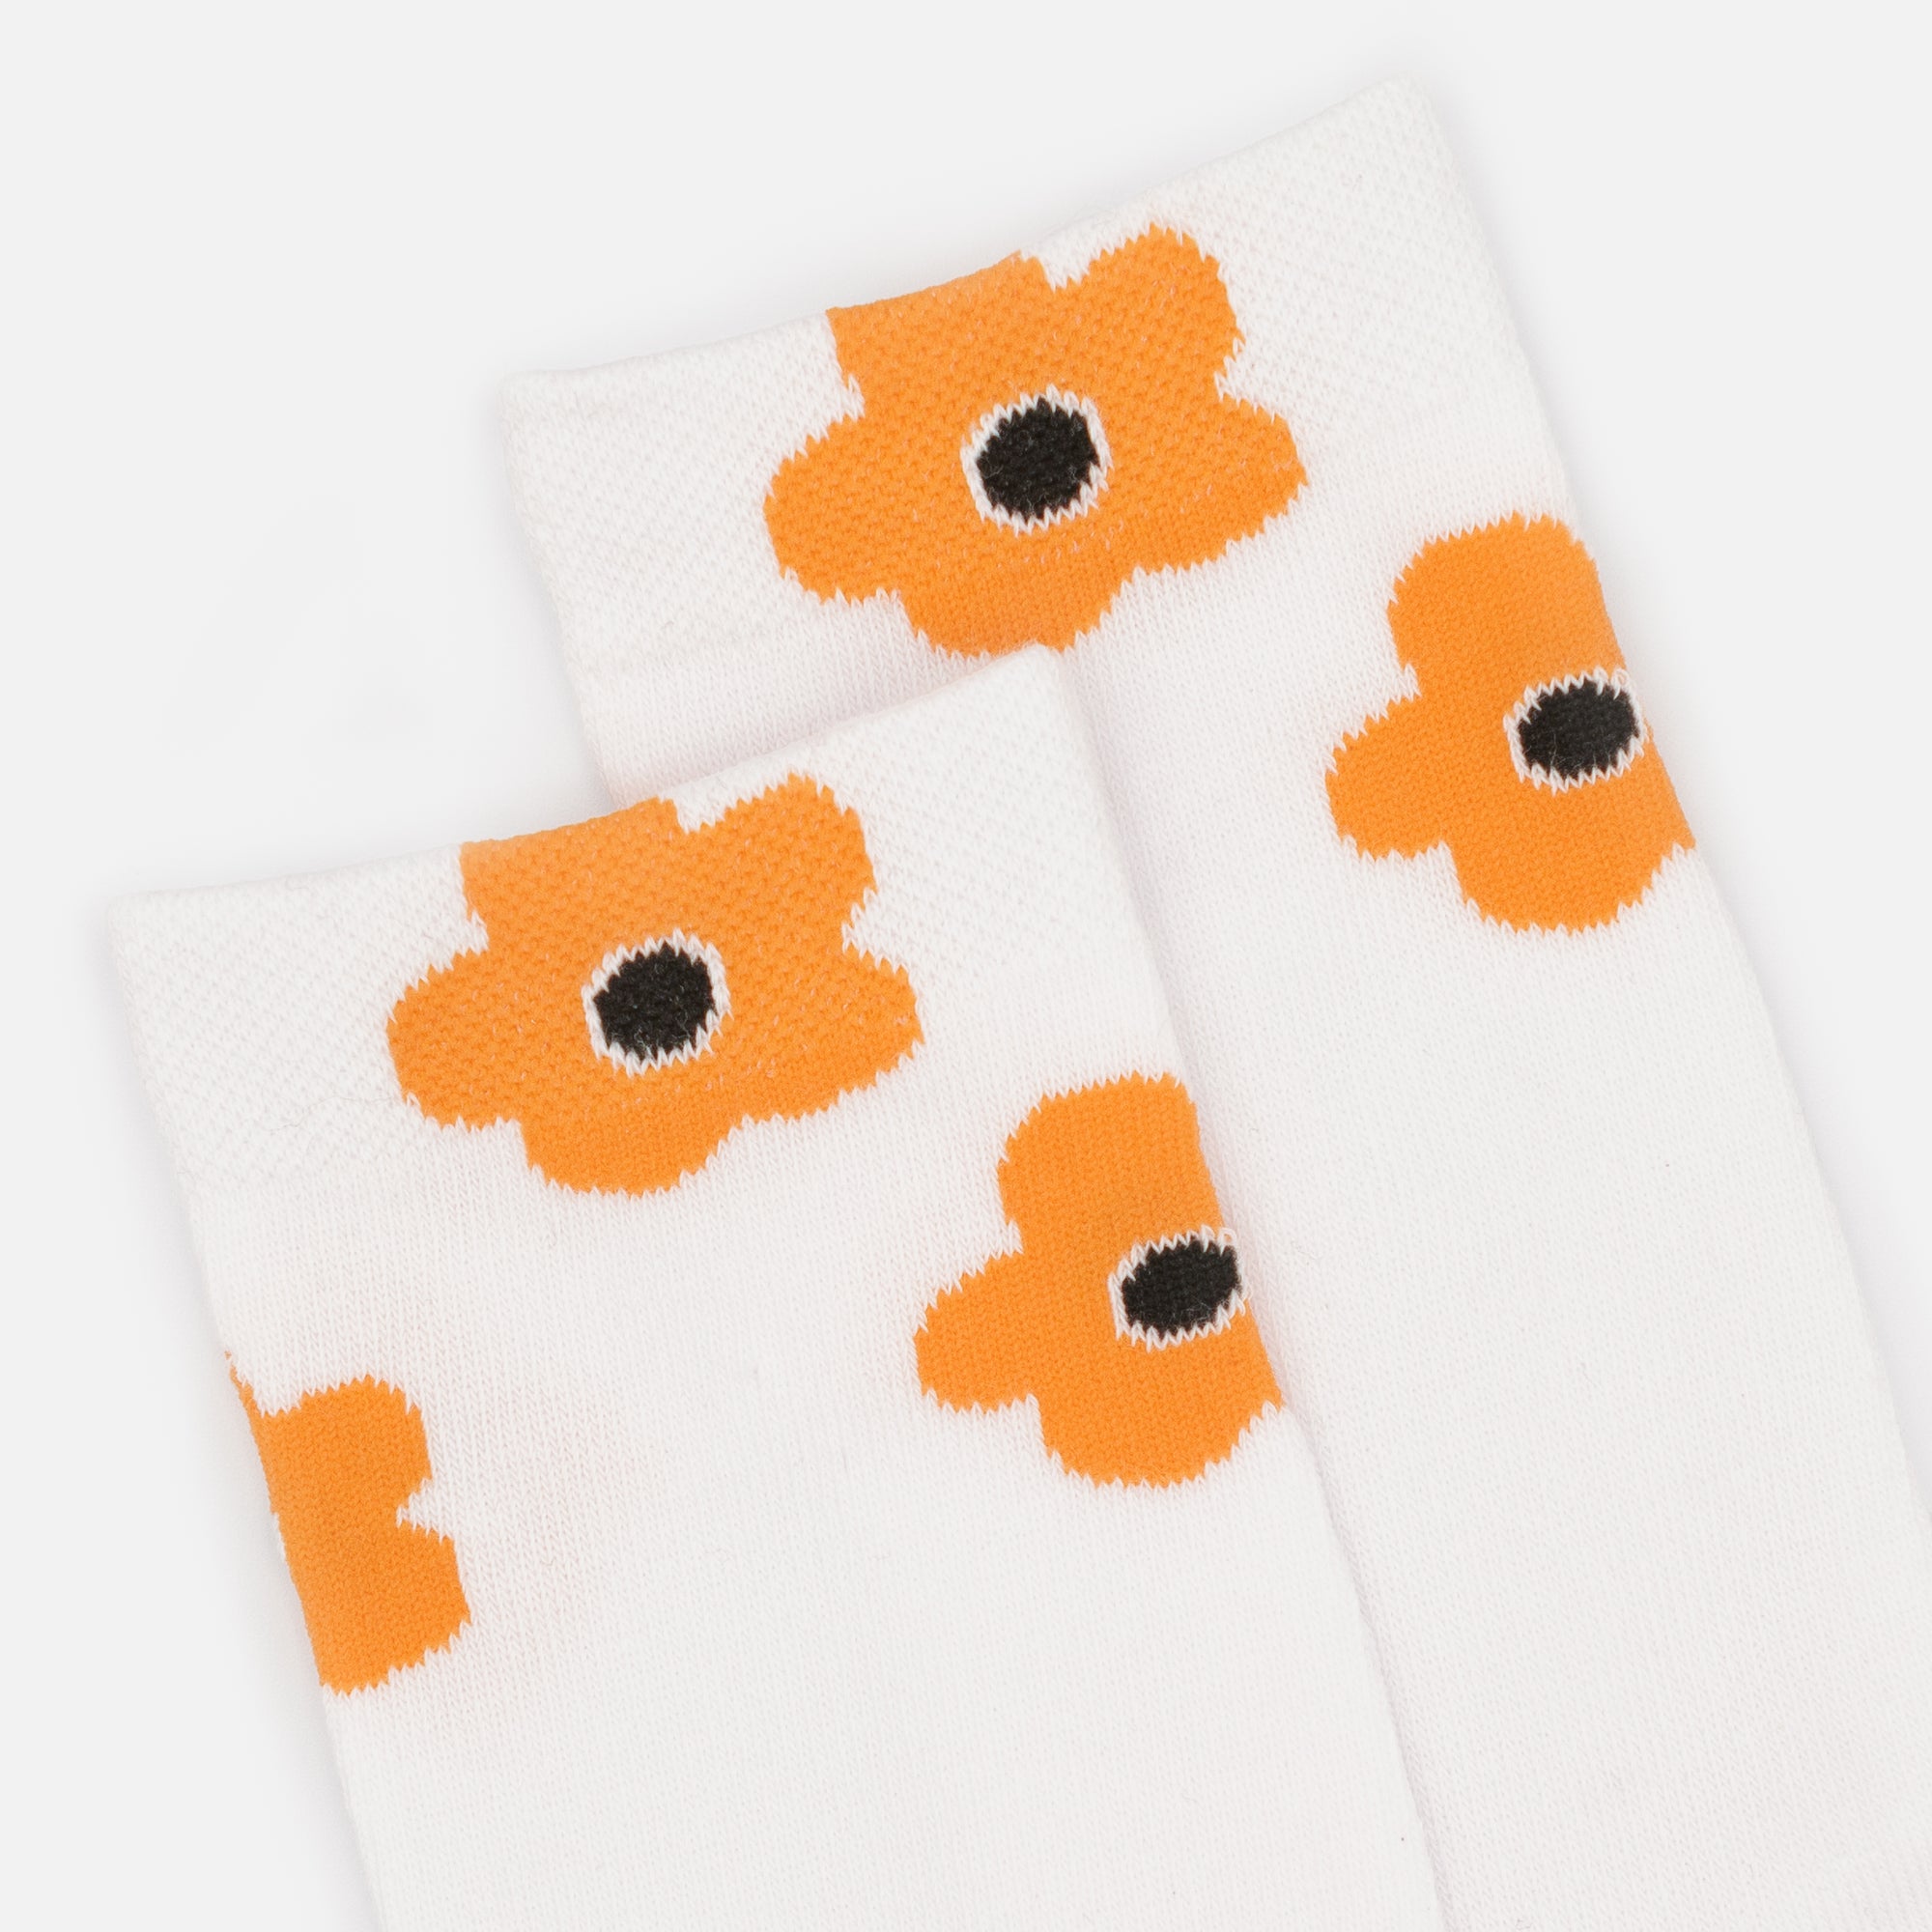 White stockings with orange flowers